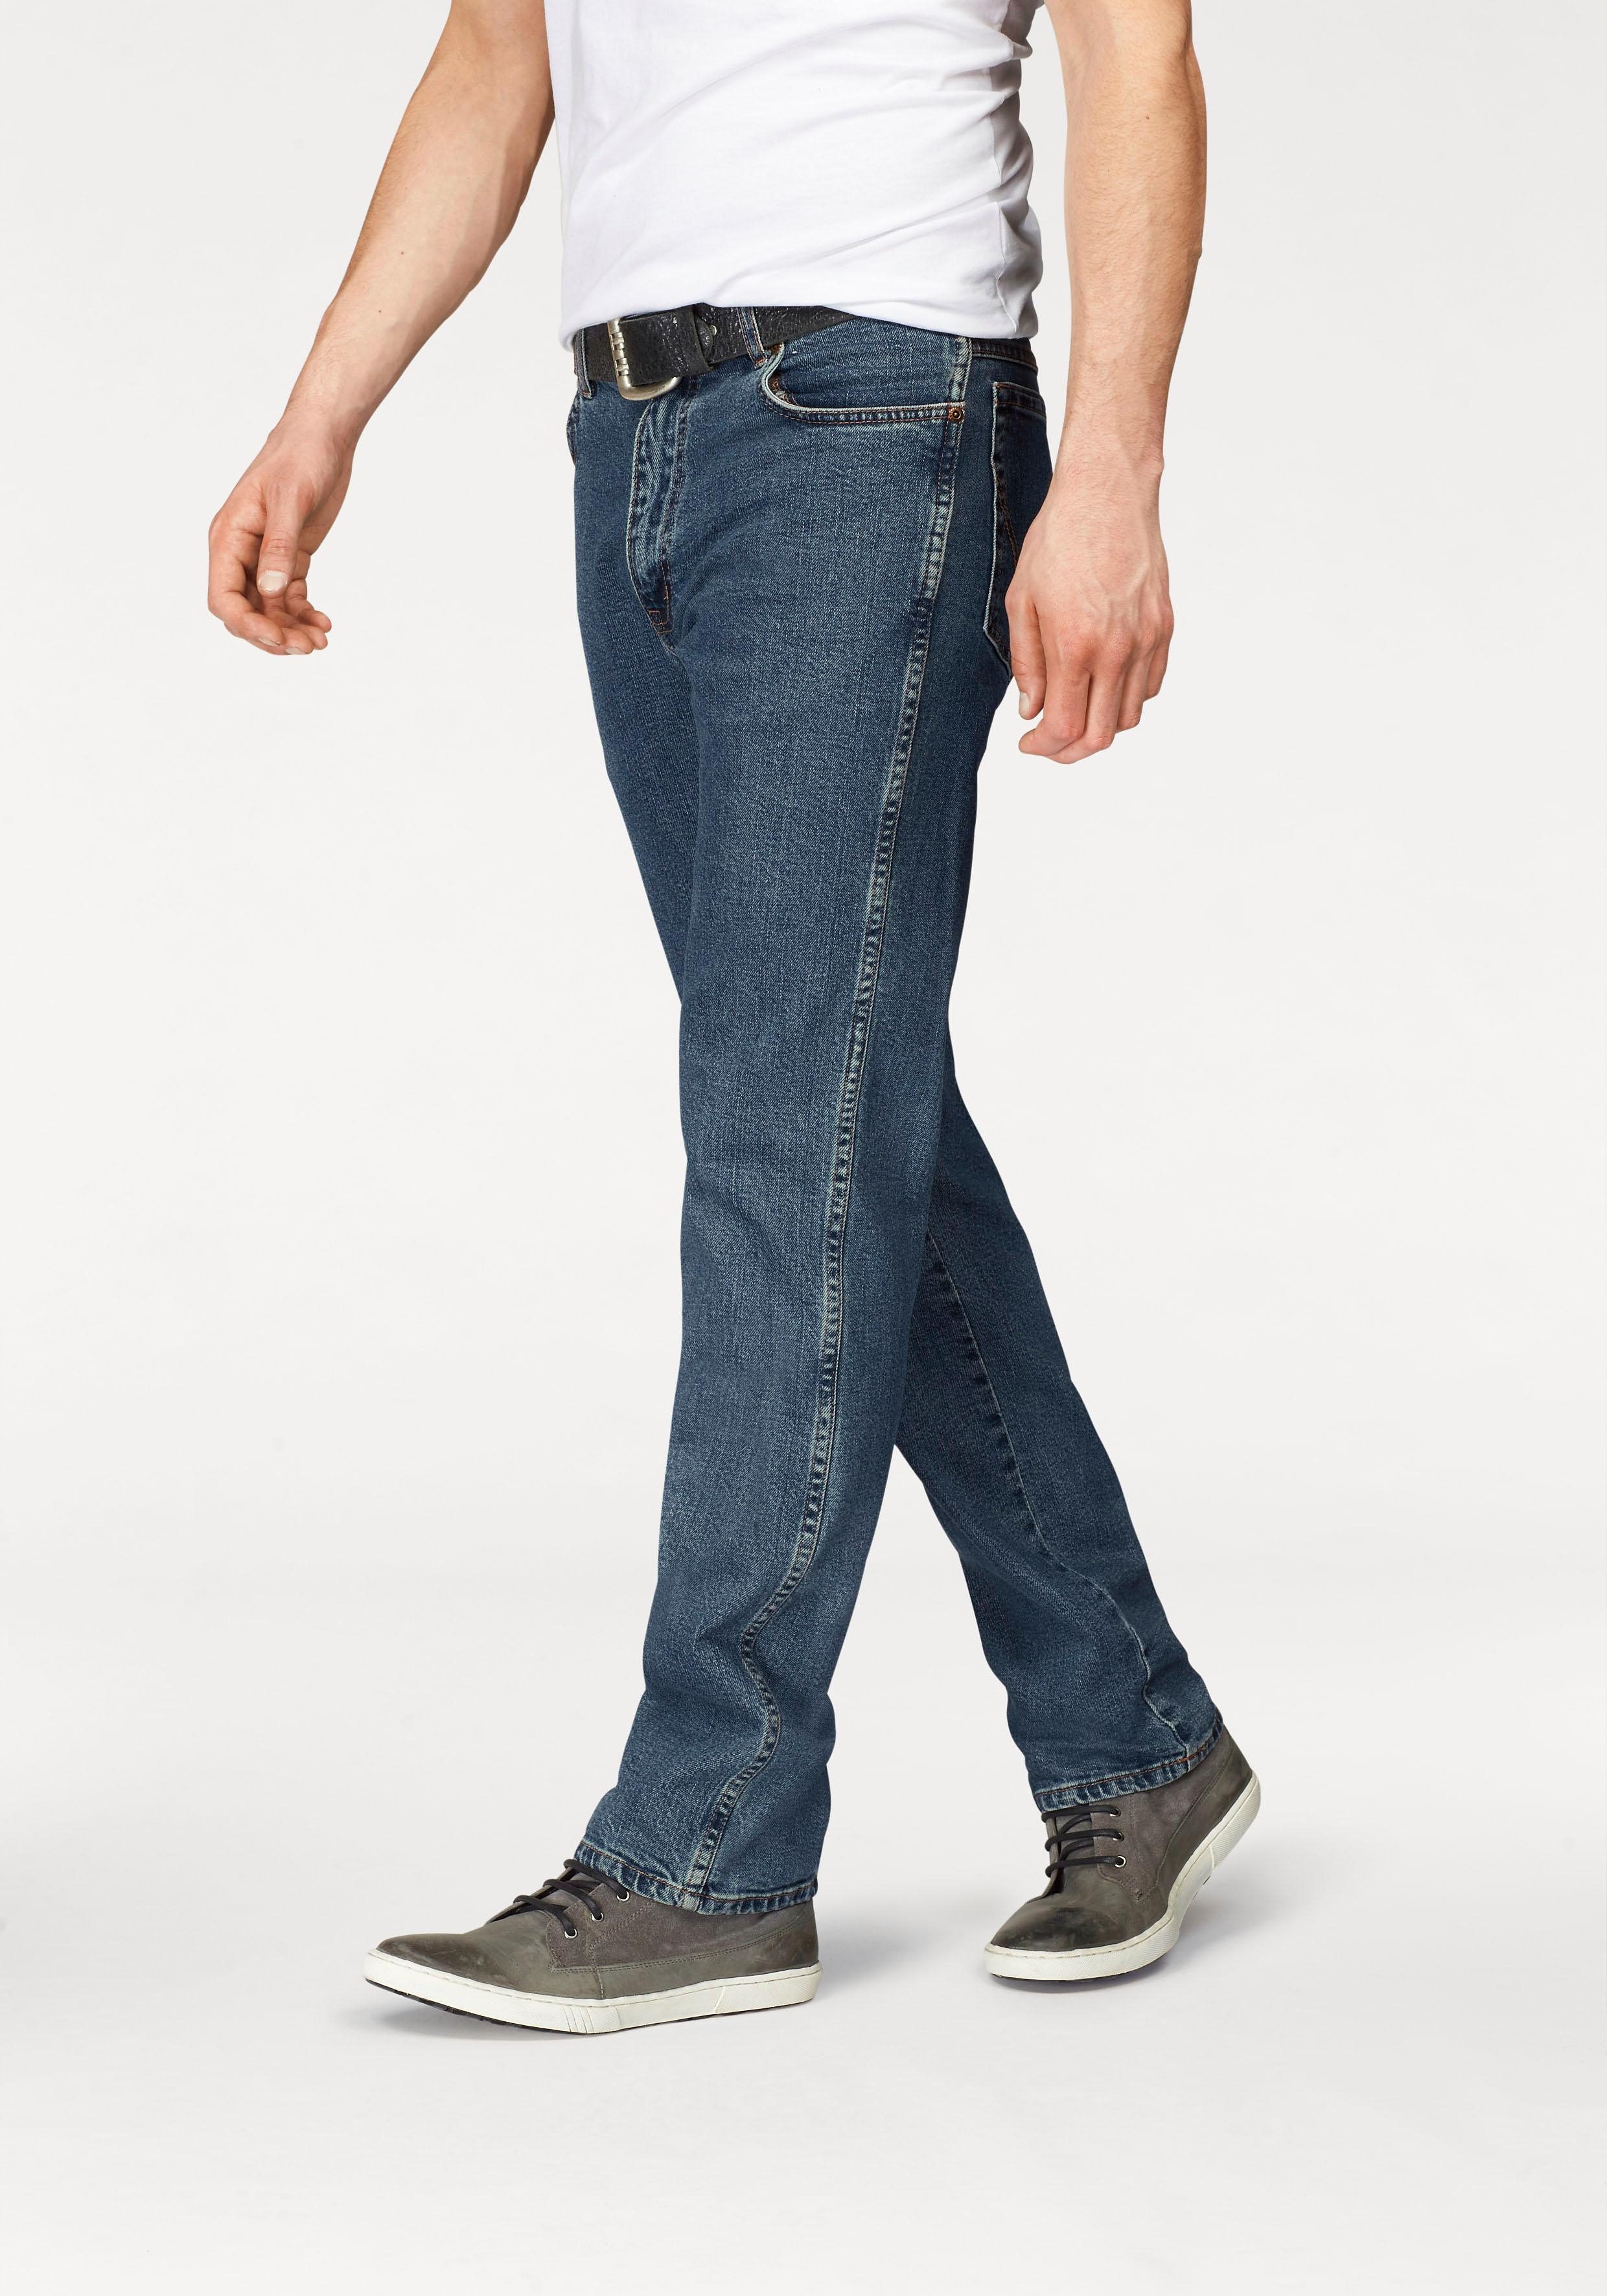 Regular jeans, WRANGLER, stretch